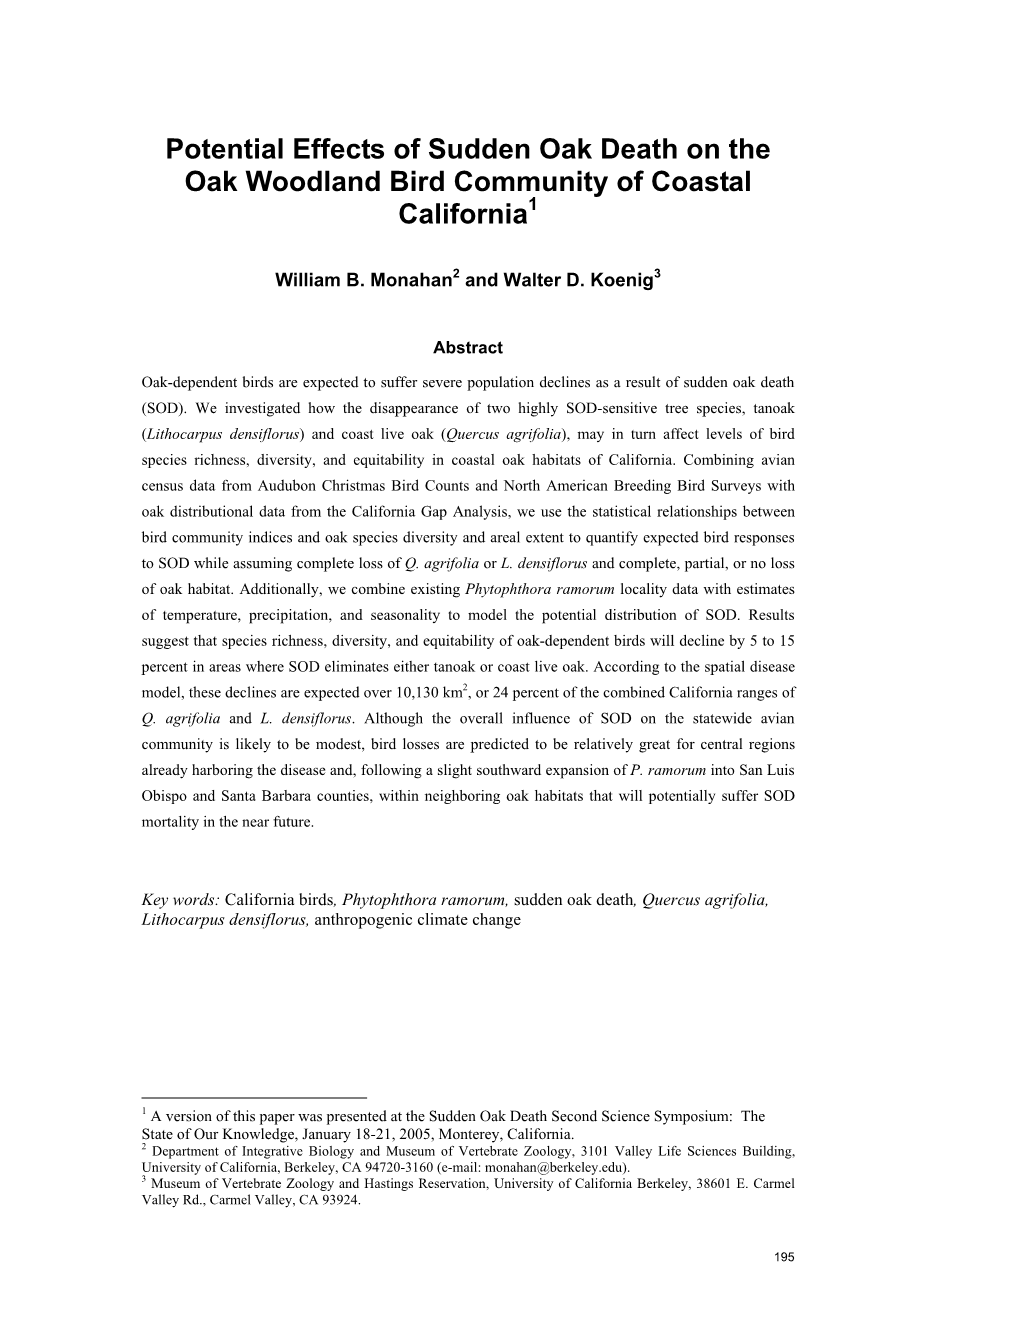 Potential Effects of Sudden Oak Death on the Oak Woodland Bird Community of Coastal California1